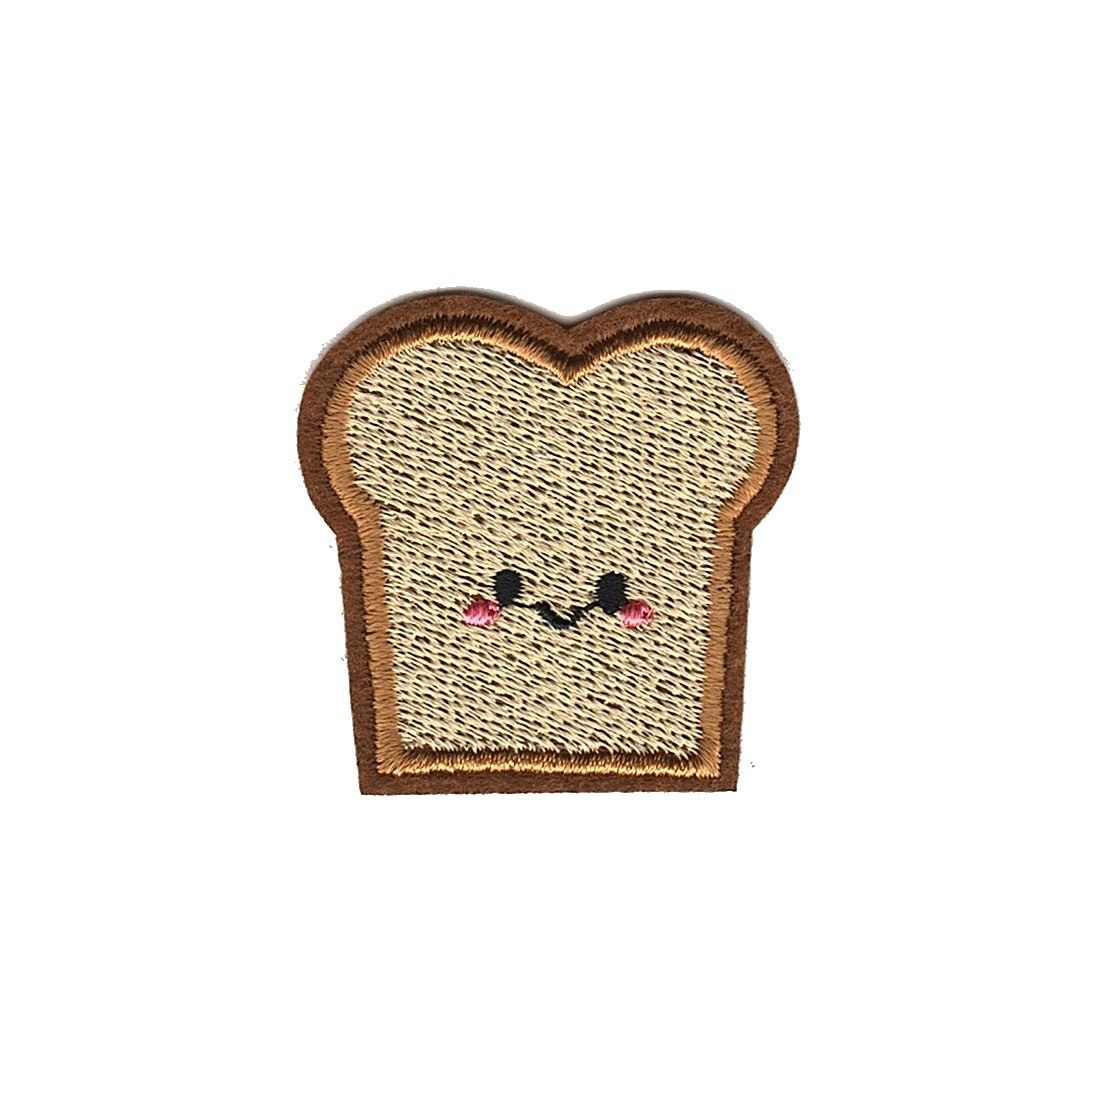 Toast / Bröd